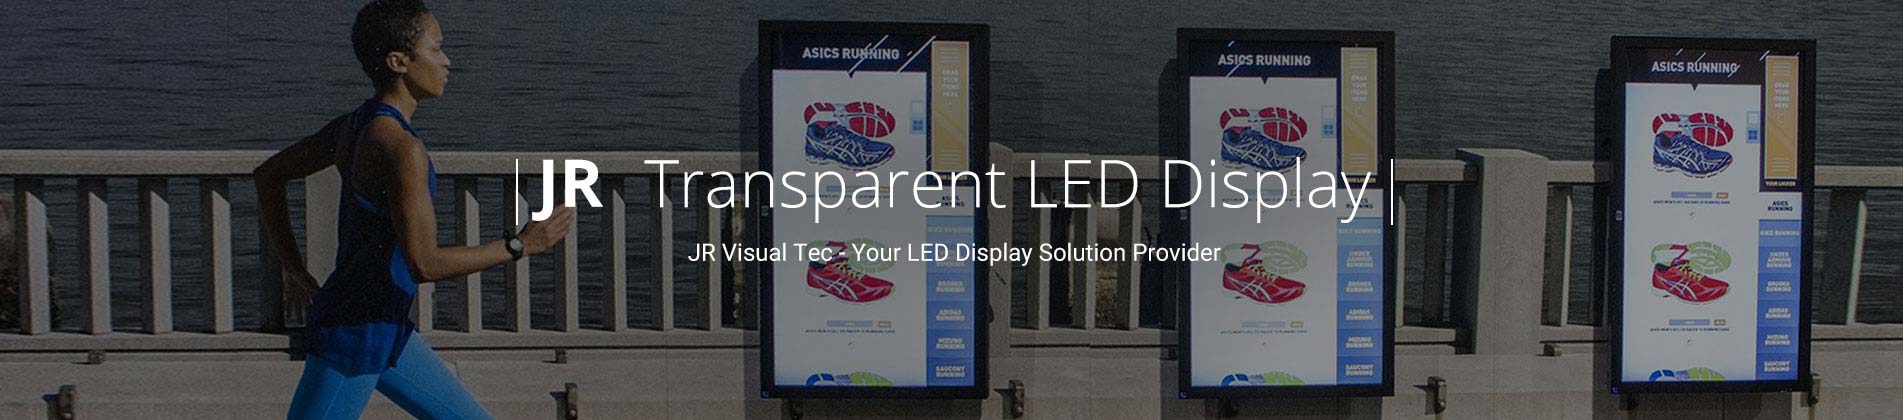 transparent led display